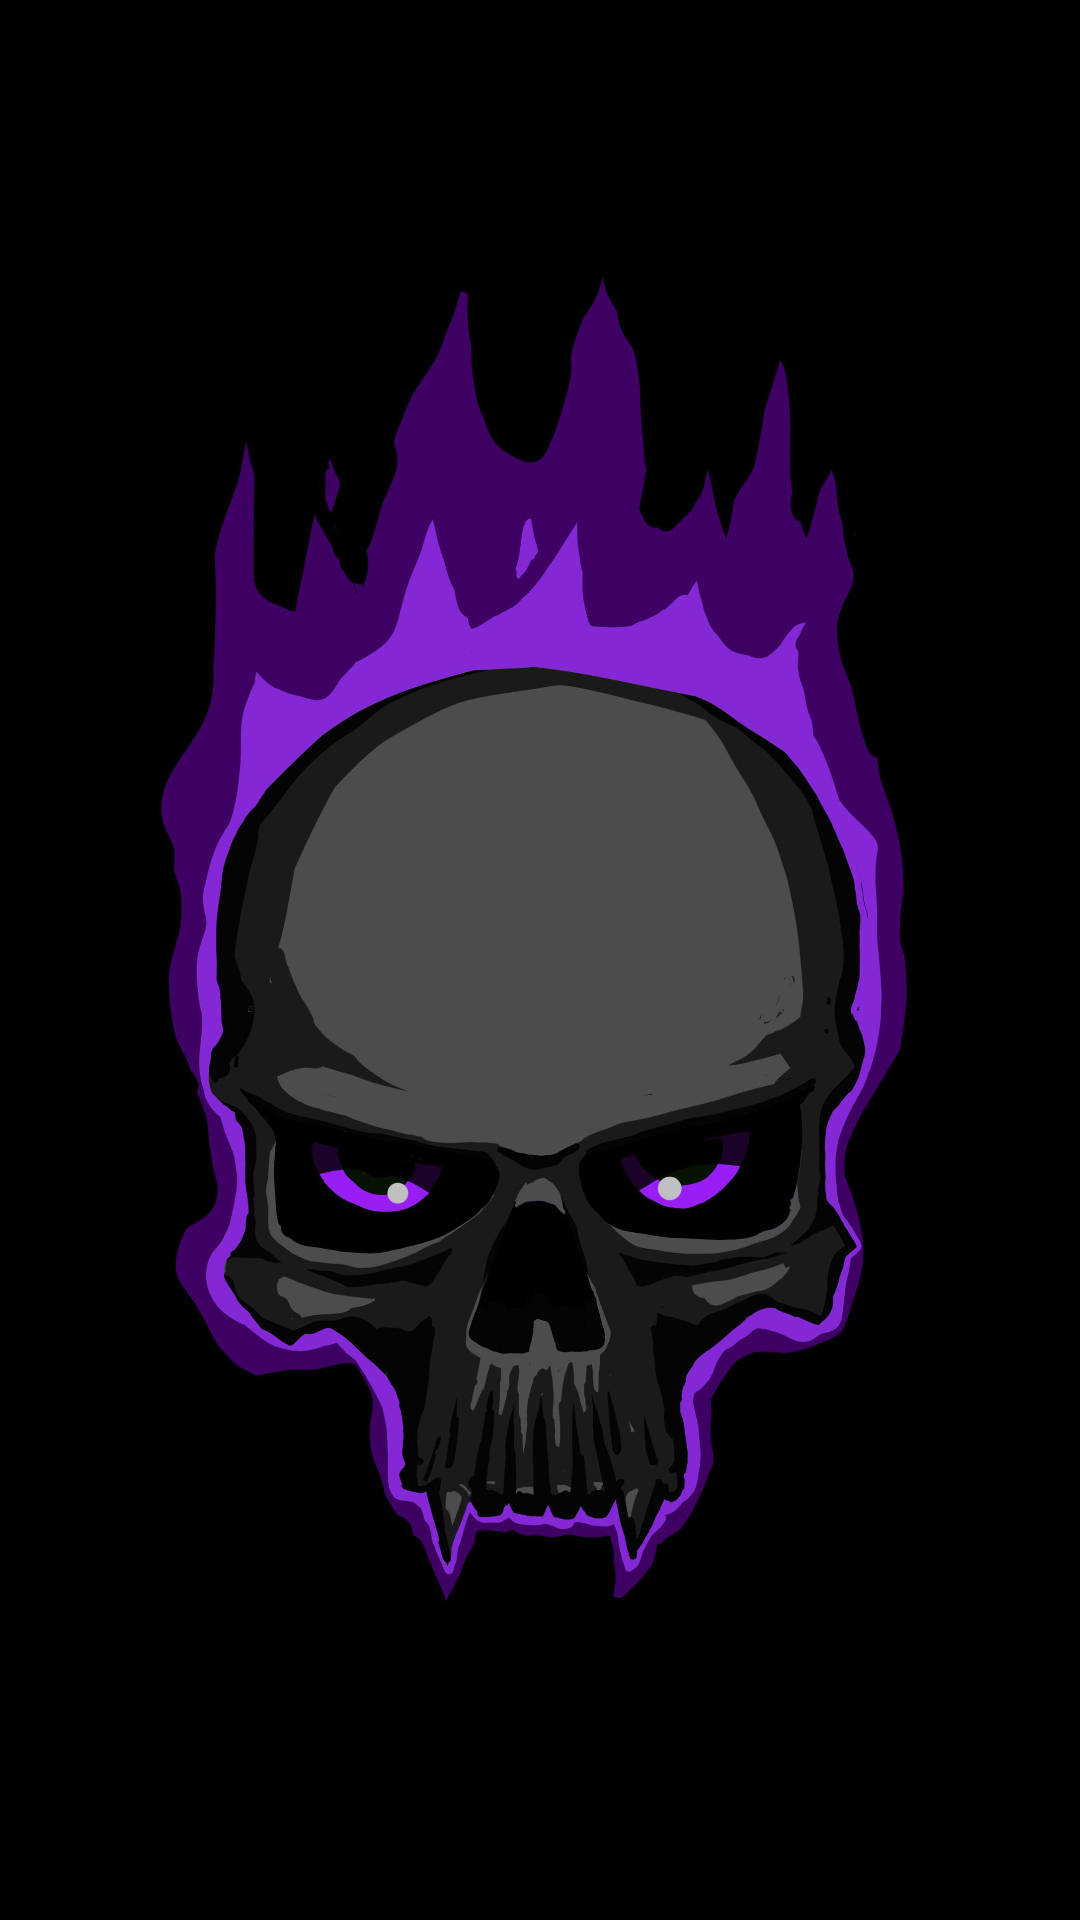 Spooky Black And Purple Aesthetic Skull Wallpaper